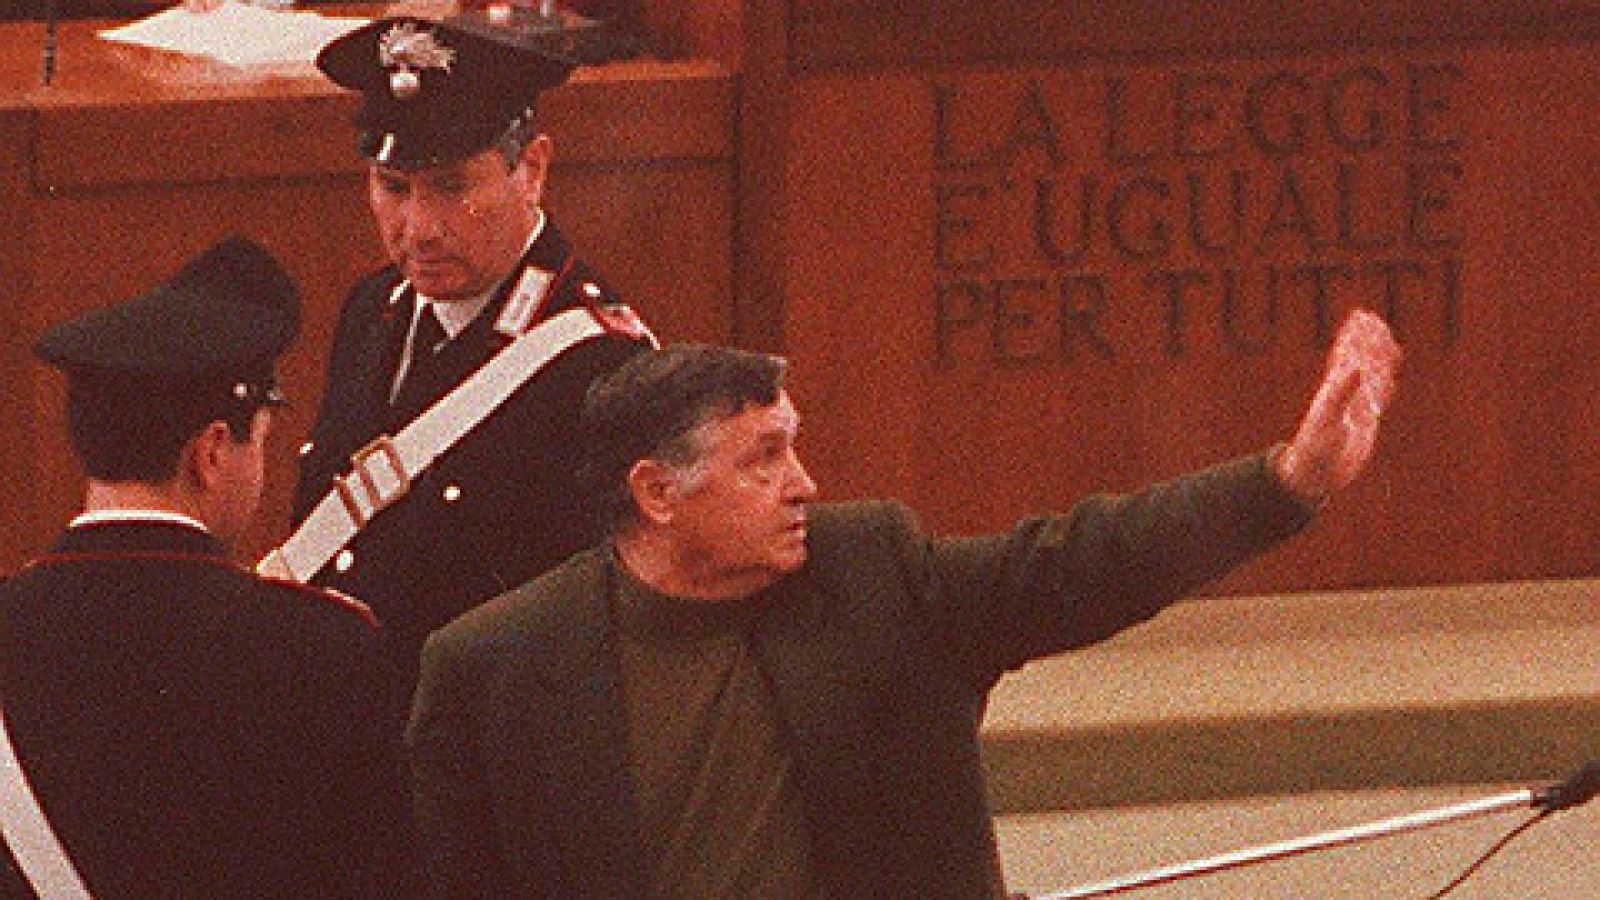 Telediario 1: Muere en la cárcel el capo mafioso italiano Salvatore 'Totò' Riina | RTVE Play